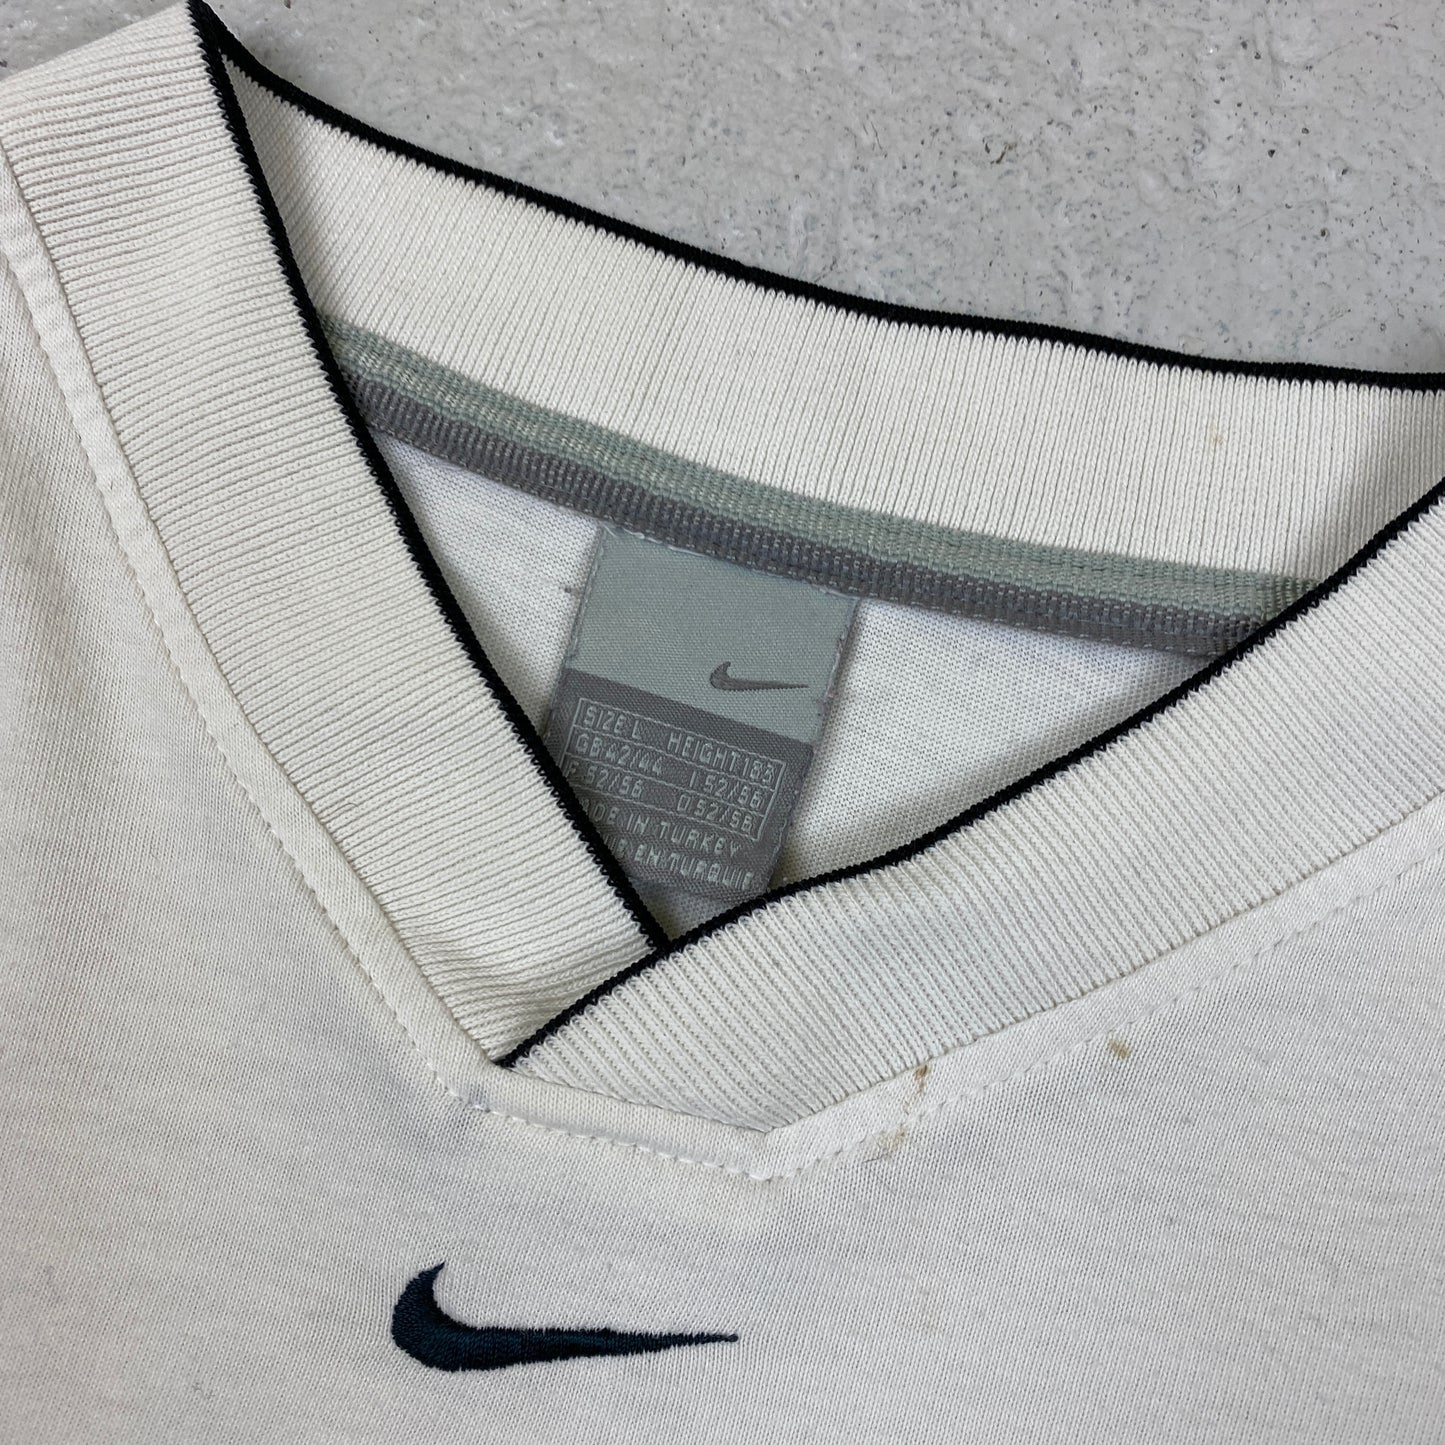 Nike embroidered center swoosh v-neck t-shirt (L)